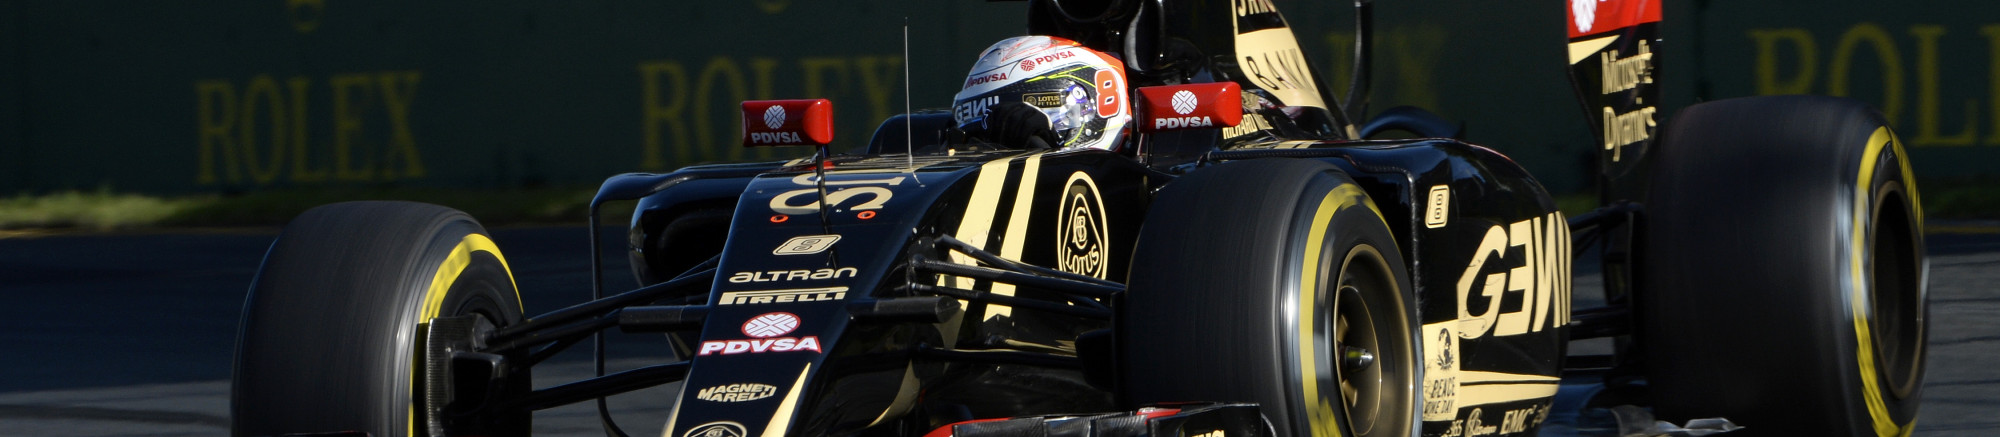 GROSJEAN romain, lotus mercedes e23 hybrid, 2015 Formula 1 Australian Grand Prix